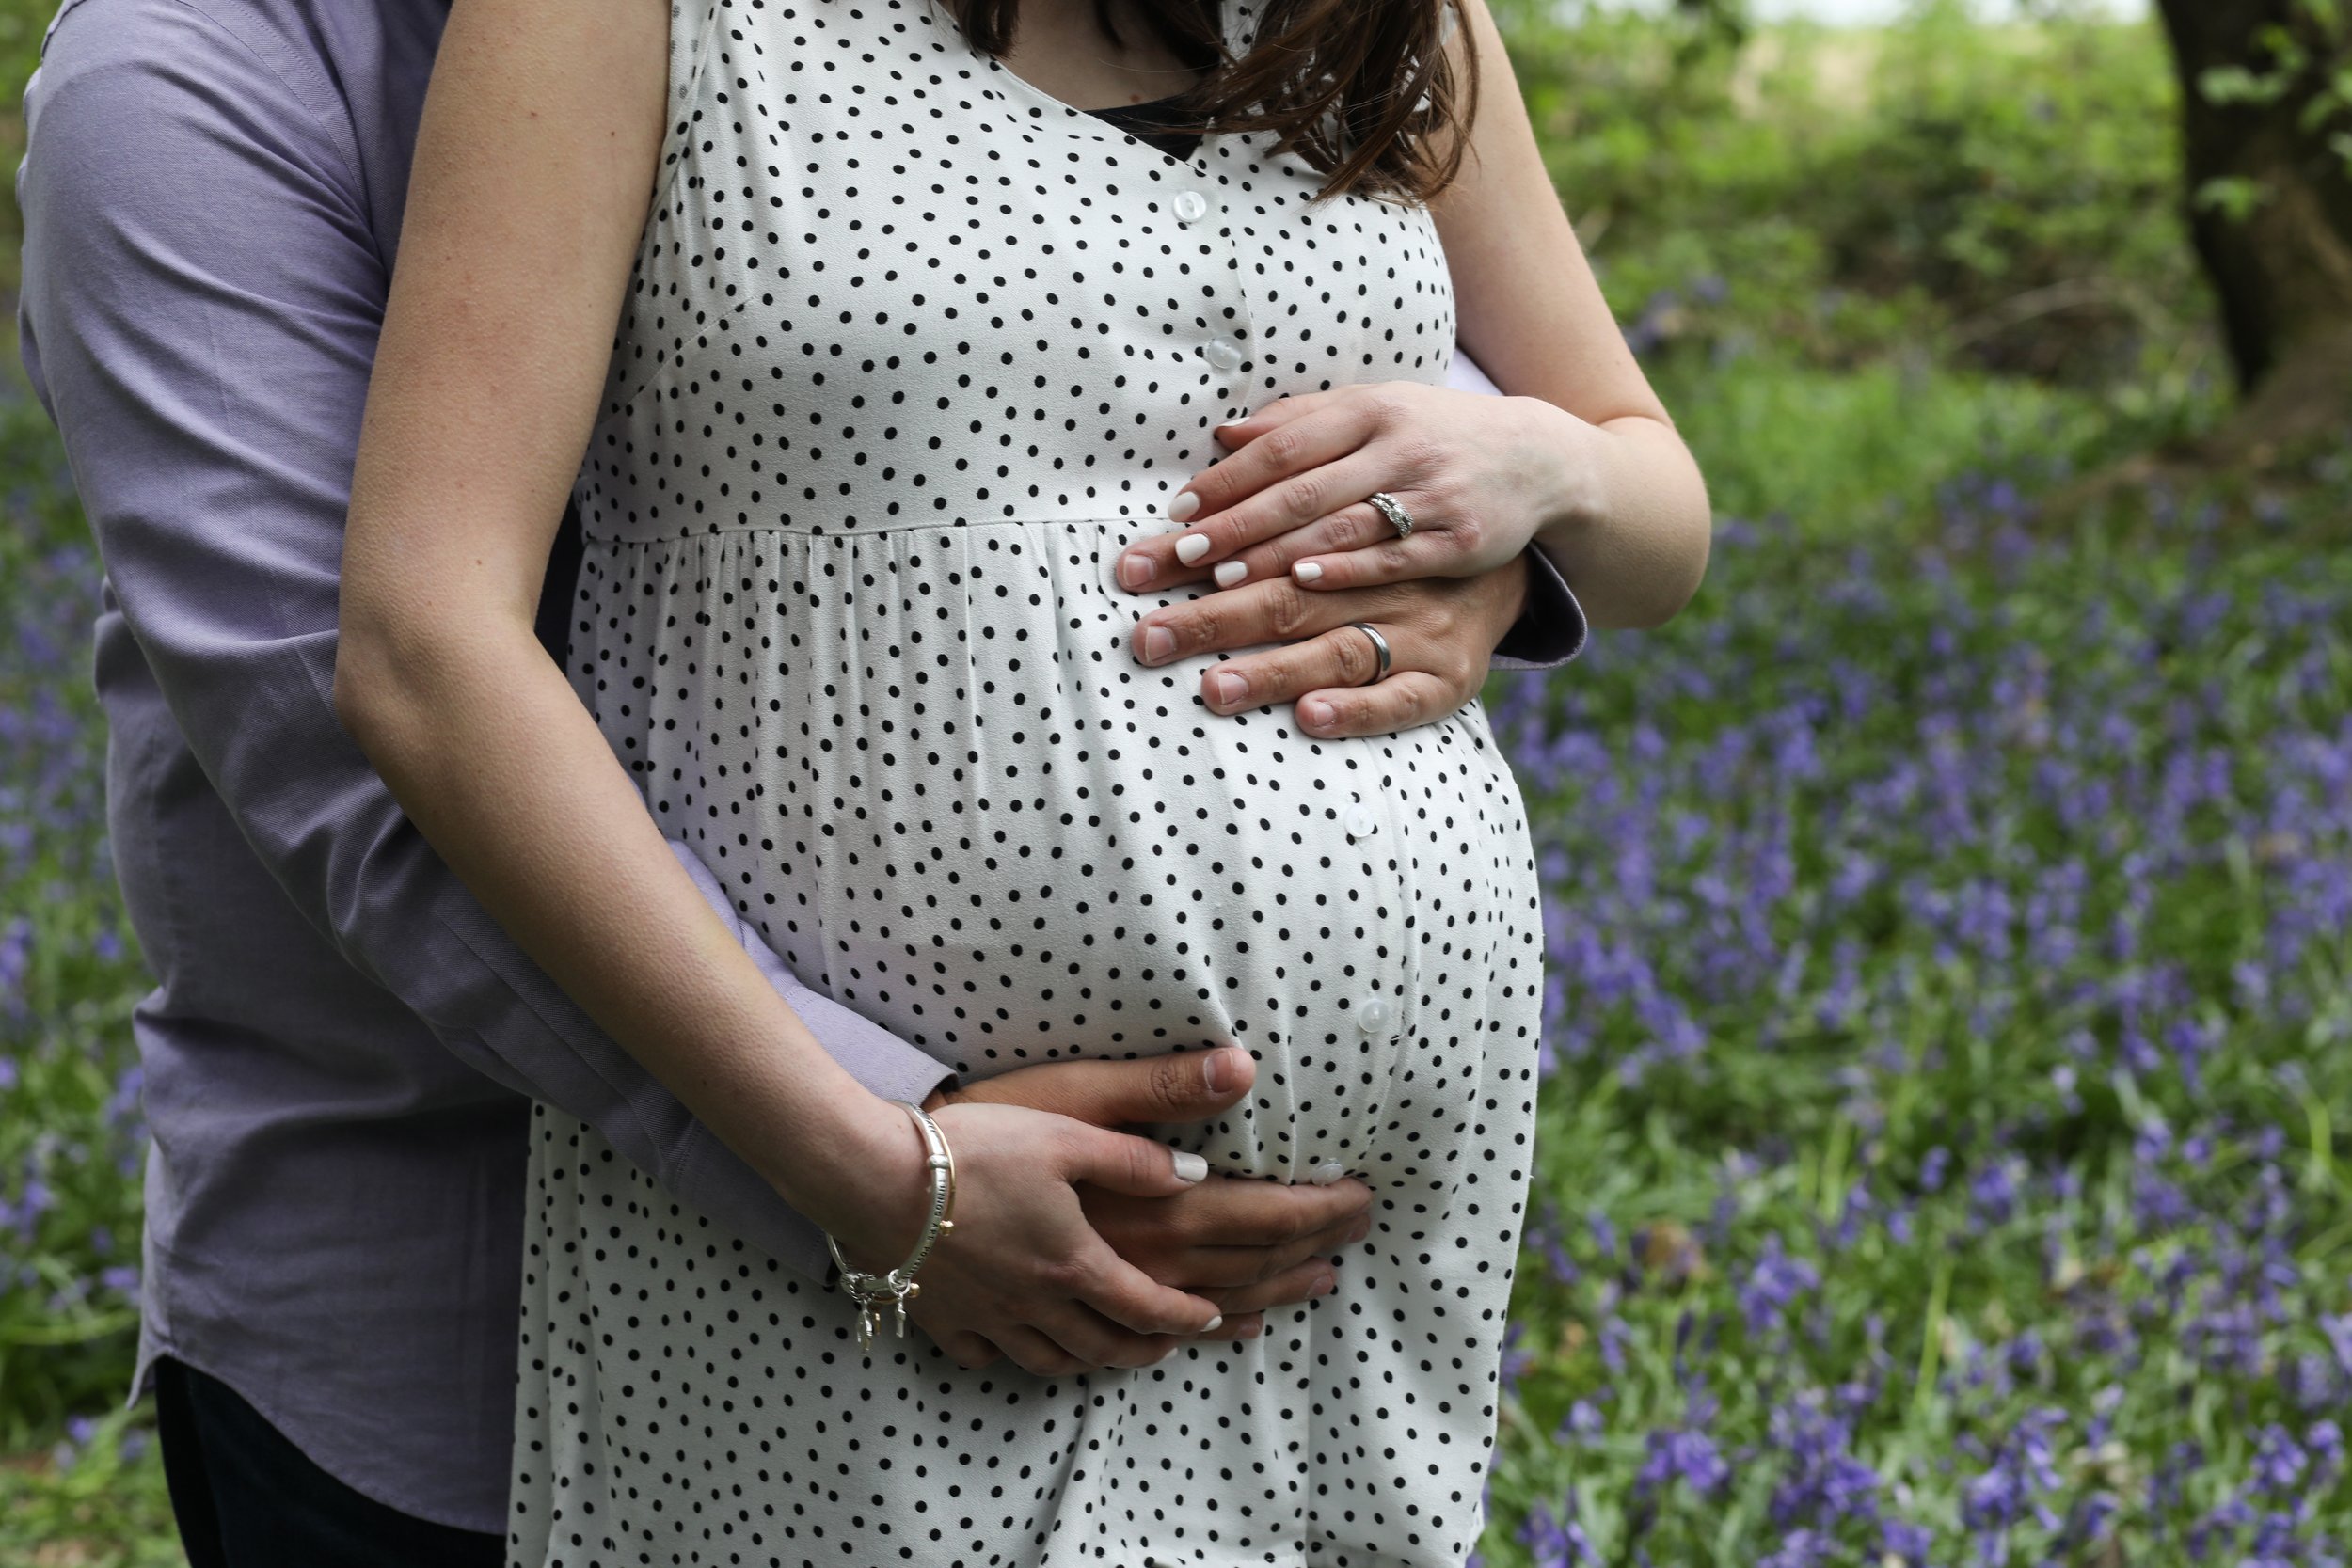 Maternity photo shoot in Berkshire | Bluebell pregnancy photos with Sarah & Bob134 choice .JPG